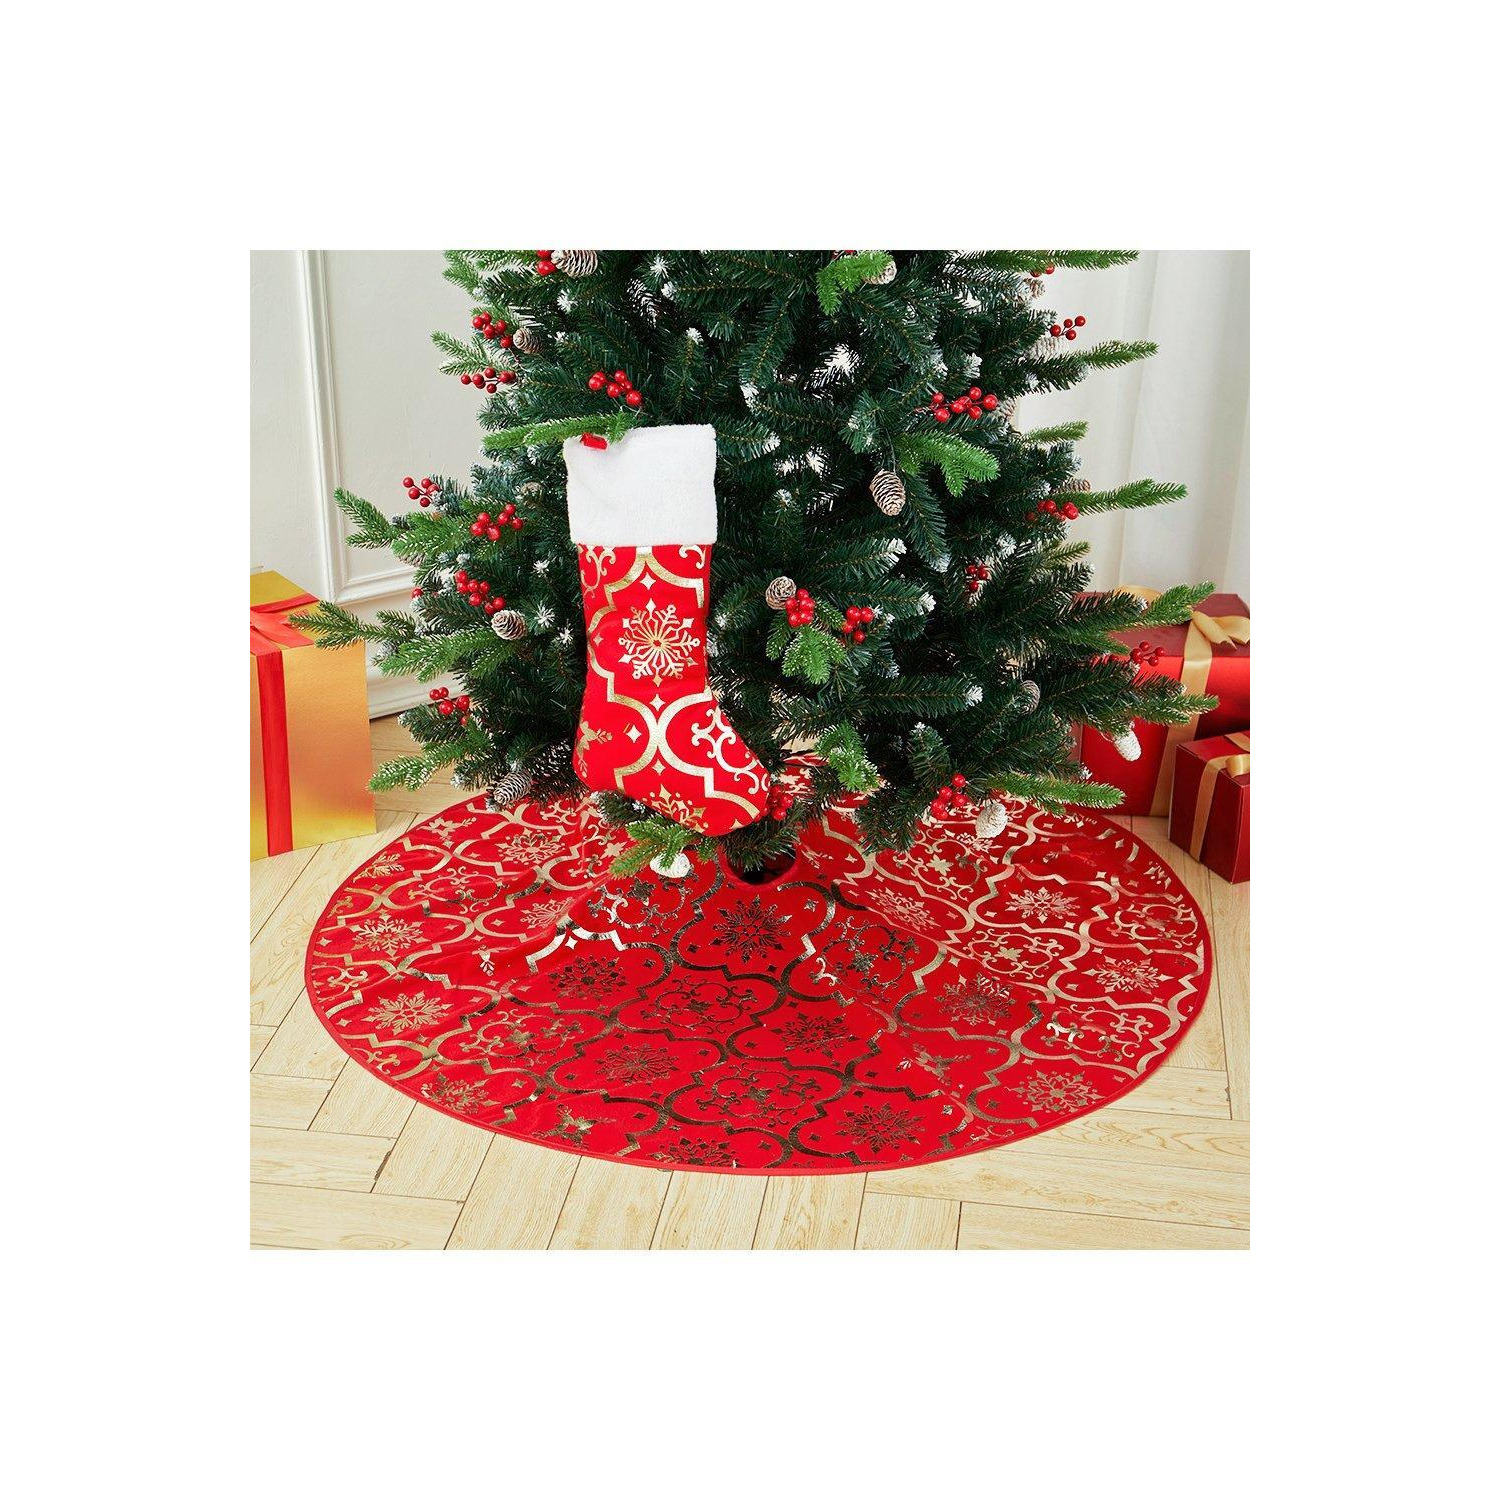 D120cm Round Shape Christmas Tree Base Skirt Xmas Ornament with Stocking - image 1